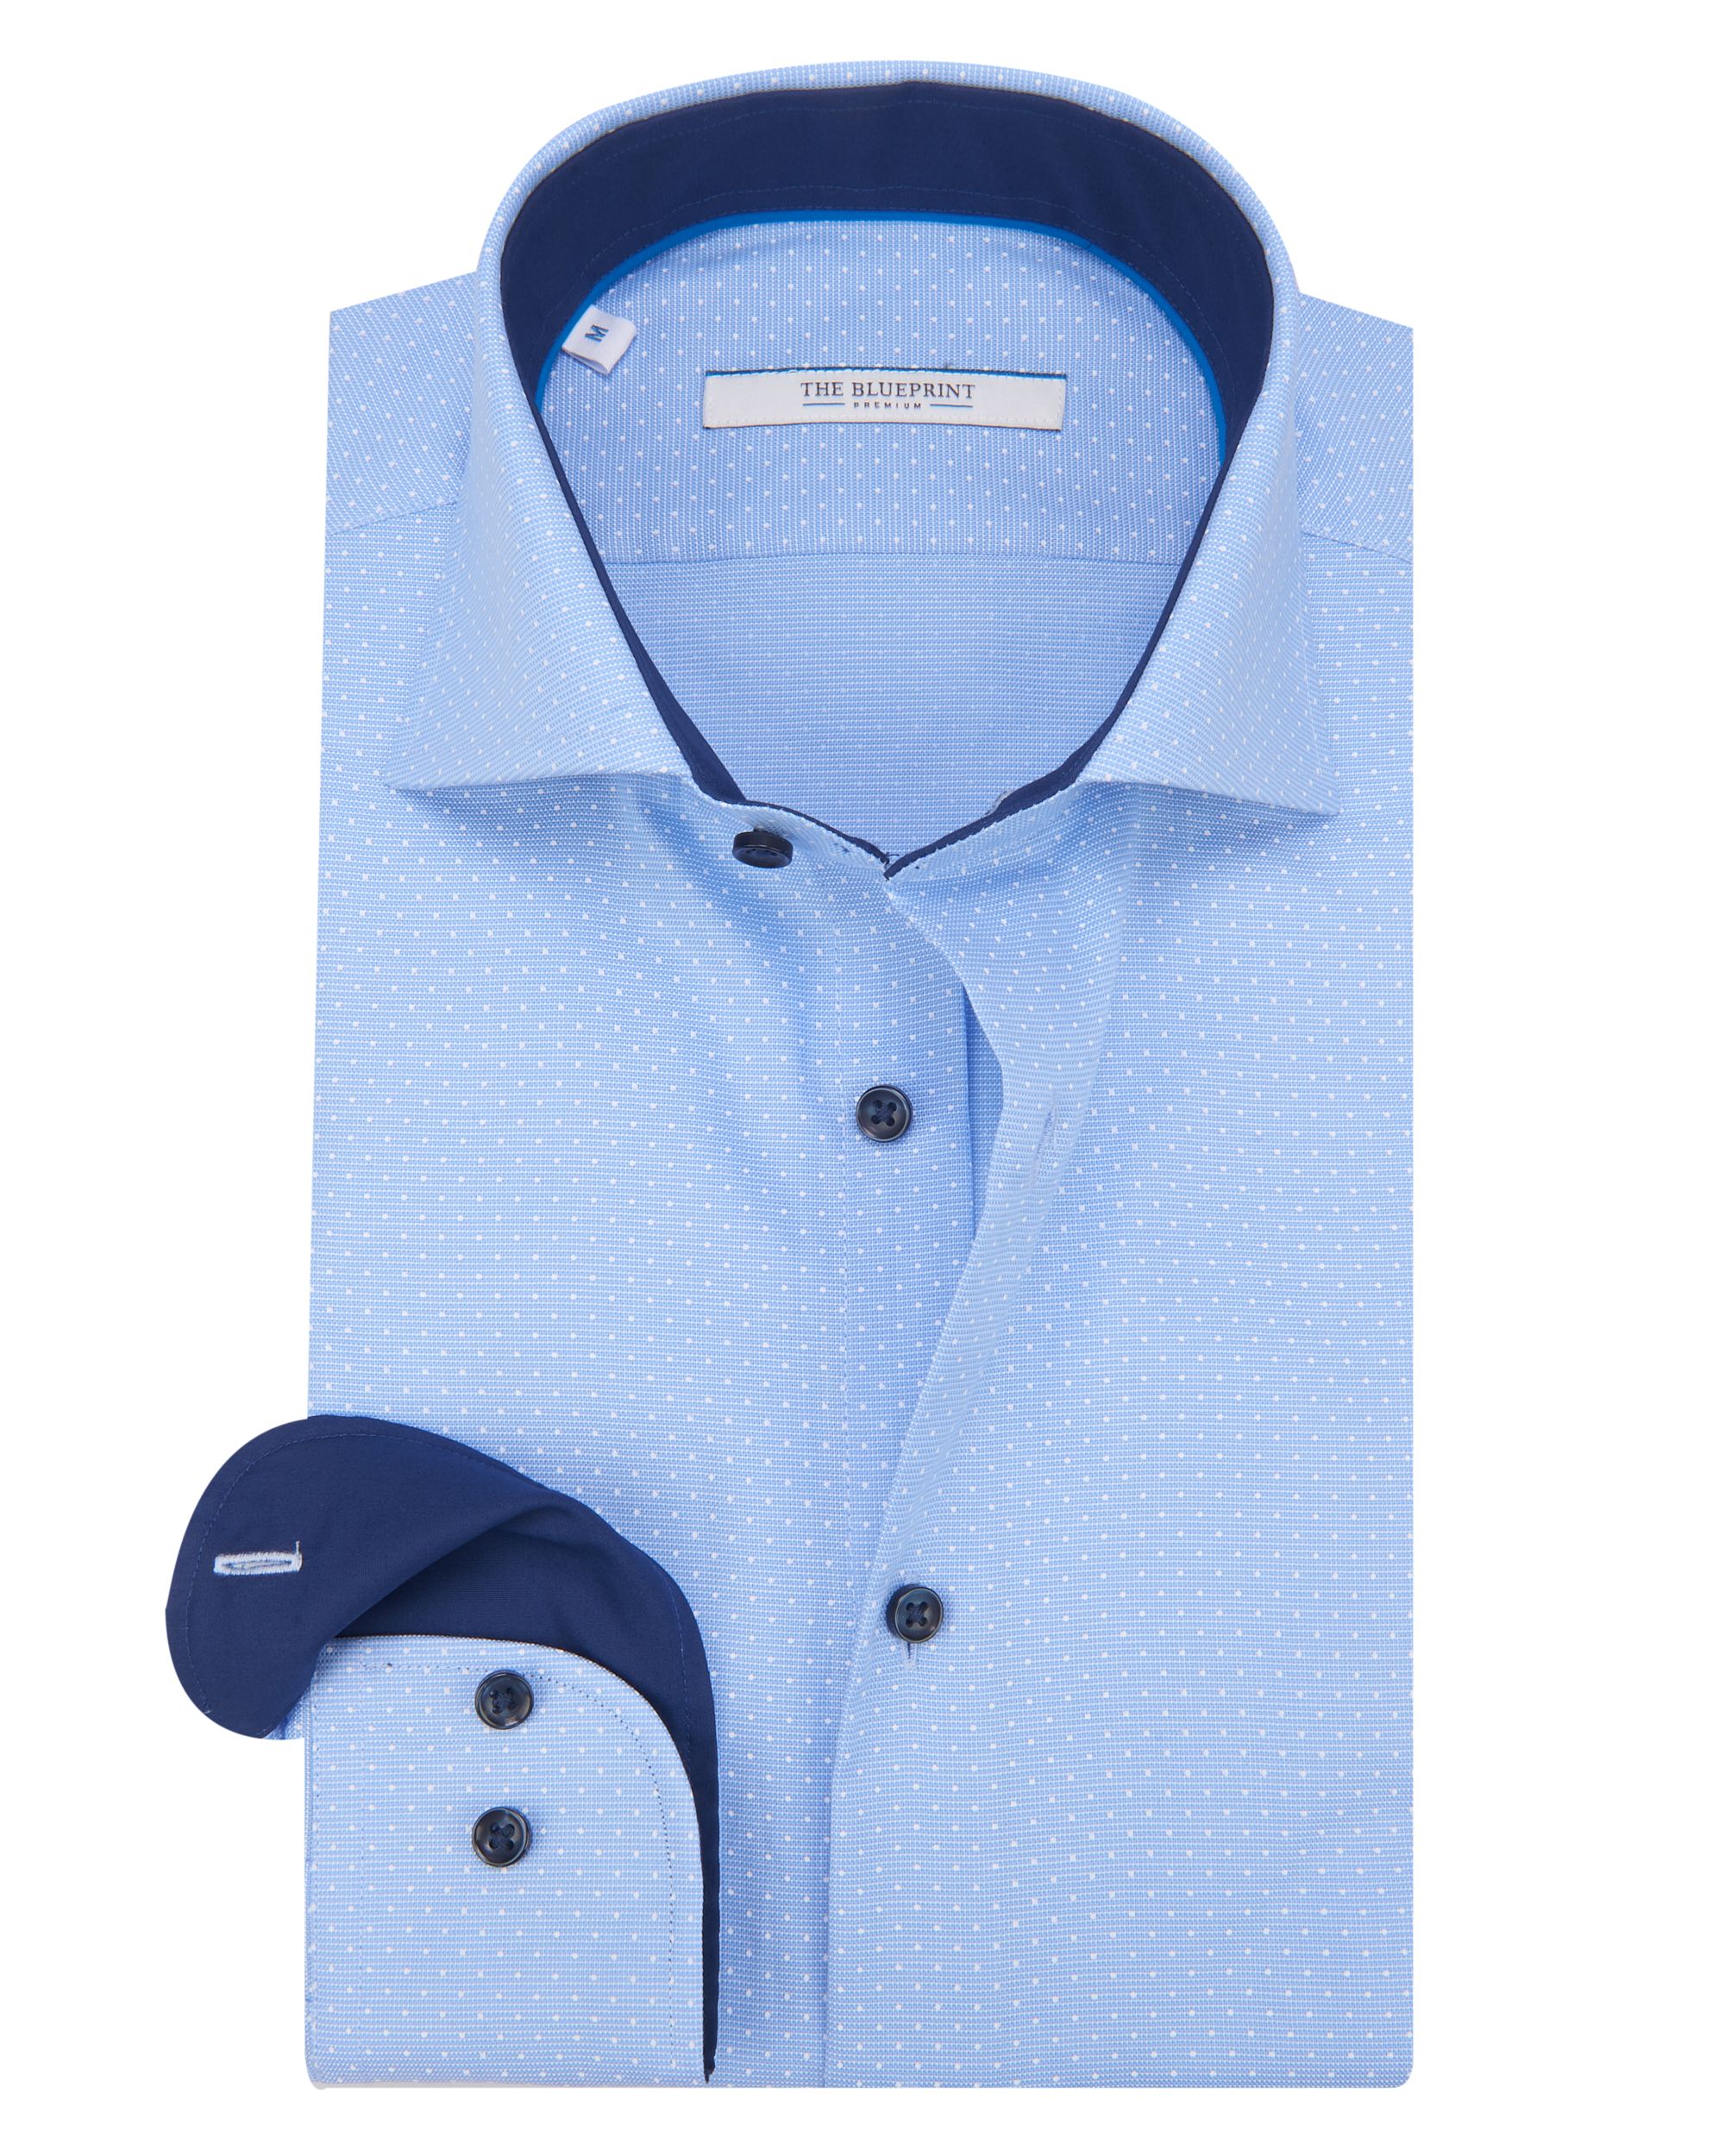 The BLUEPRINT Premium Trendy overhemd LM Blauw stip  078650-001-L